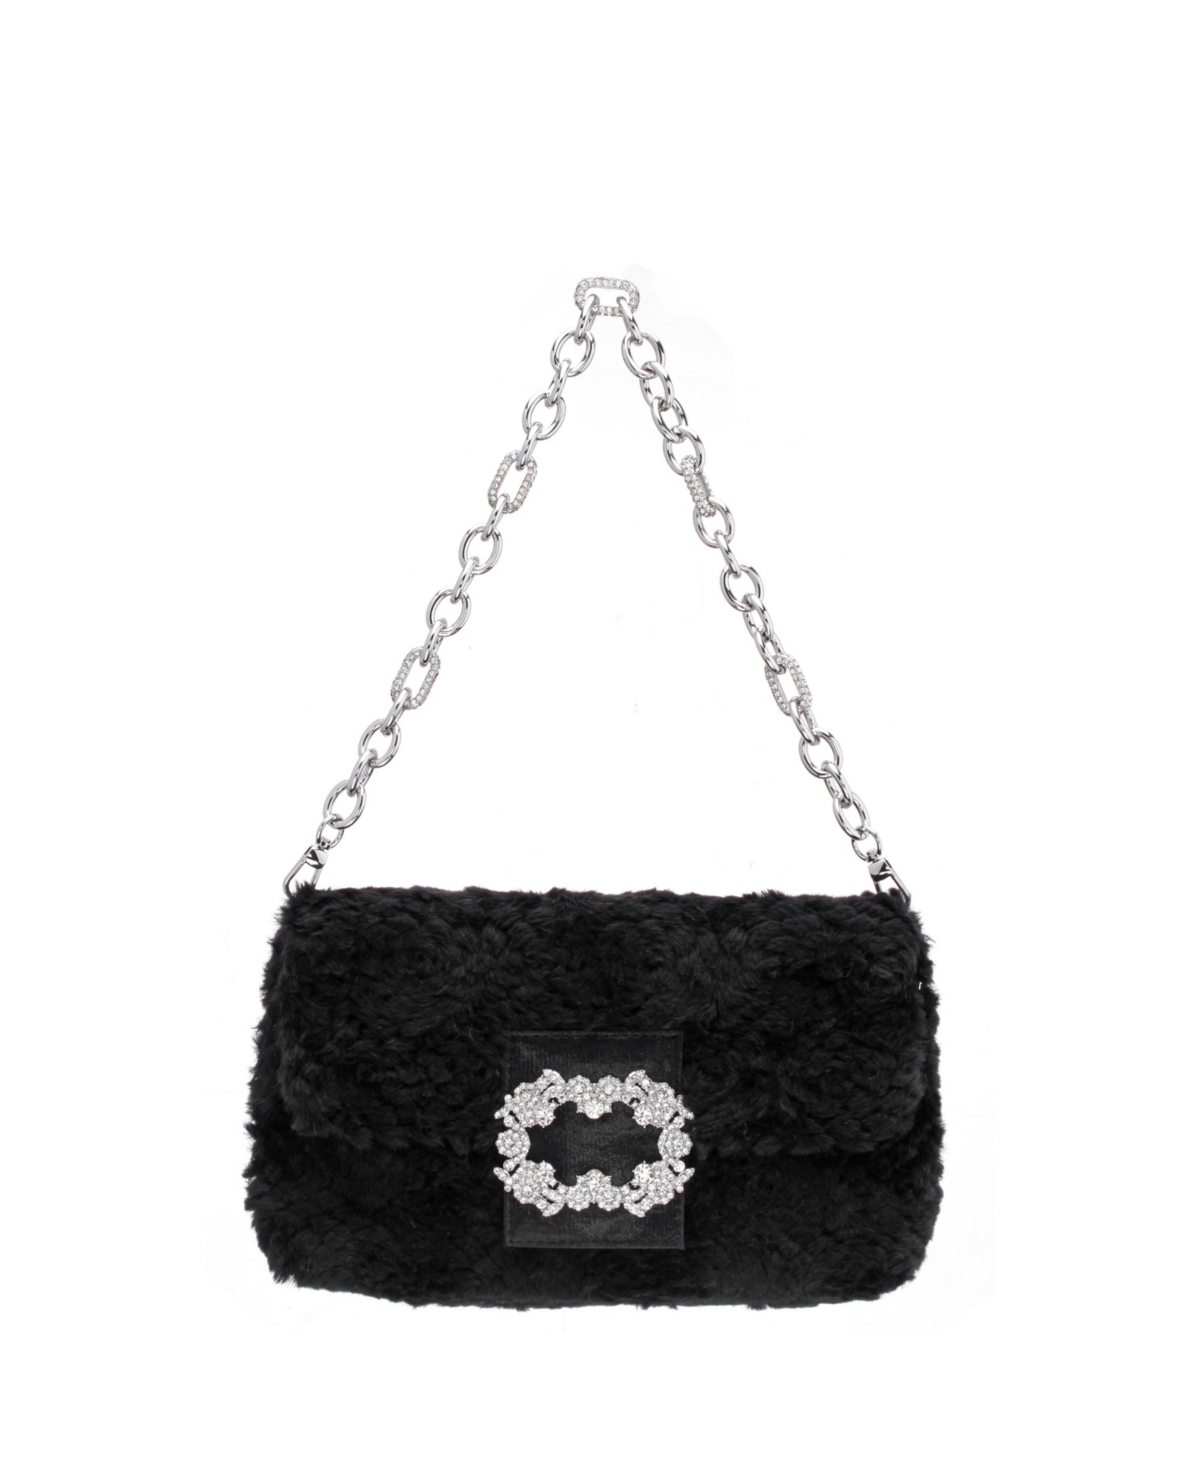 Women's Faux Fur Baguette Bag with Crystal Buckle - Black